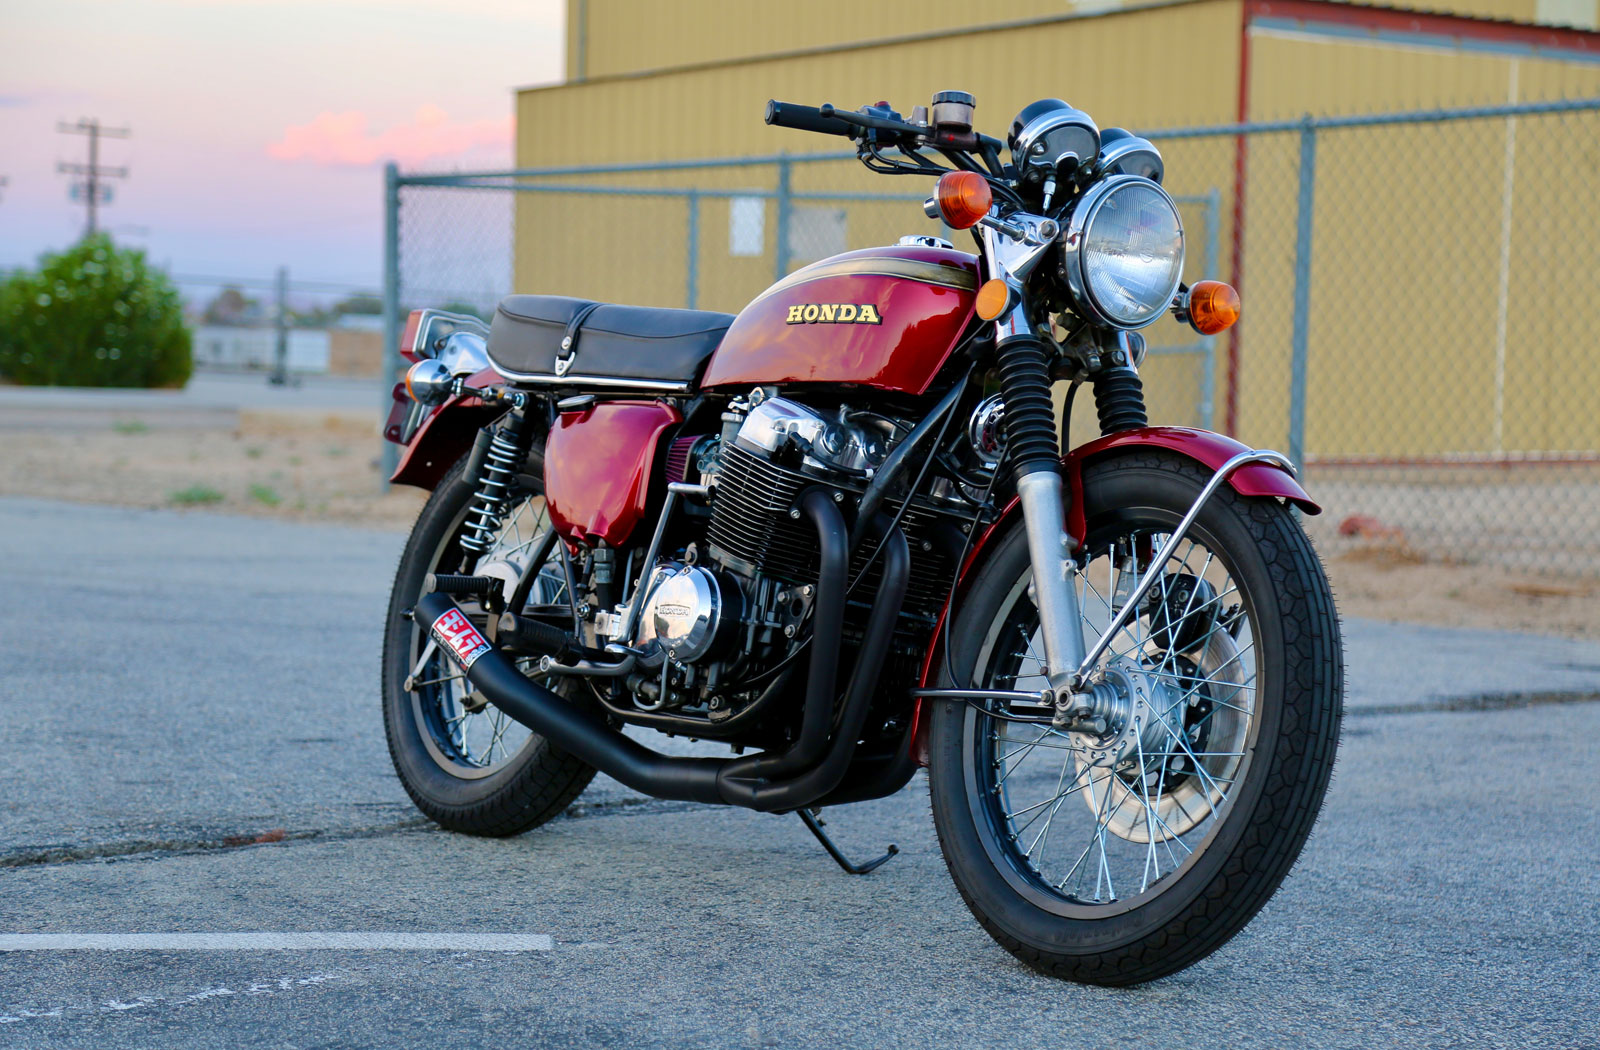 Honda CB750 restoration and mod